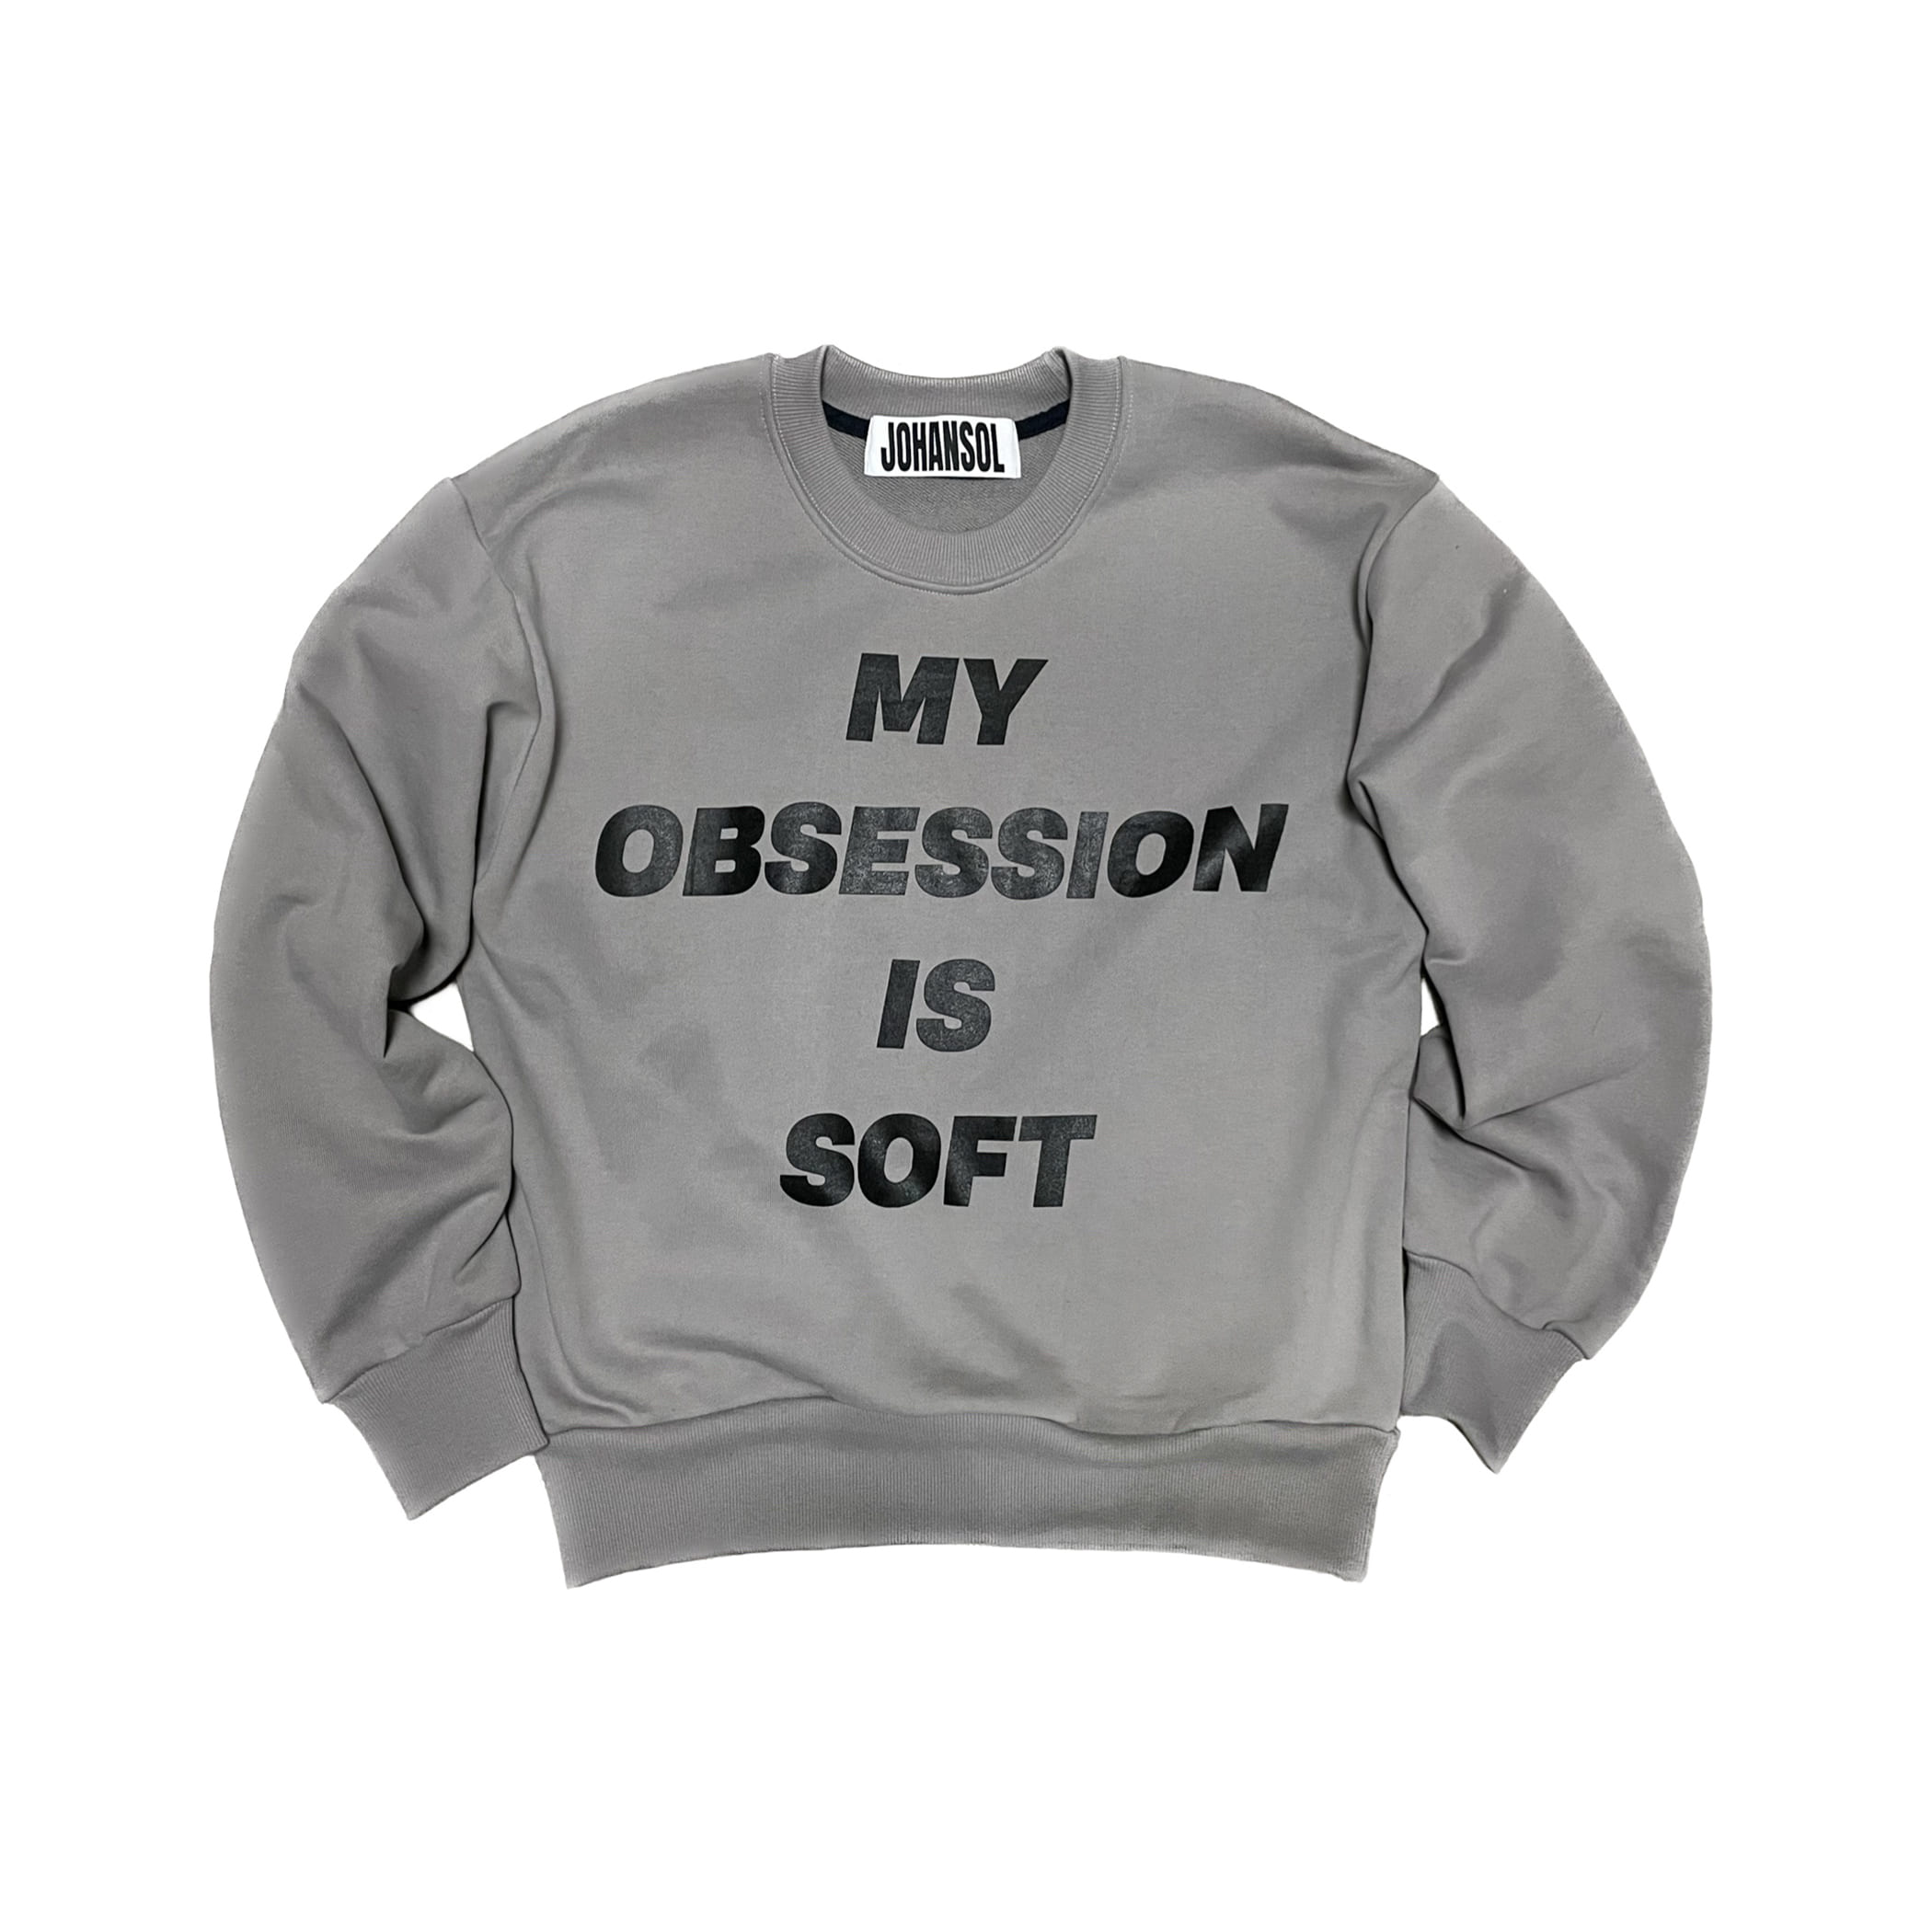 Soft Obsession sweatshirt